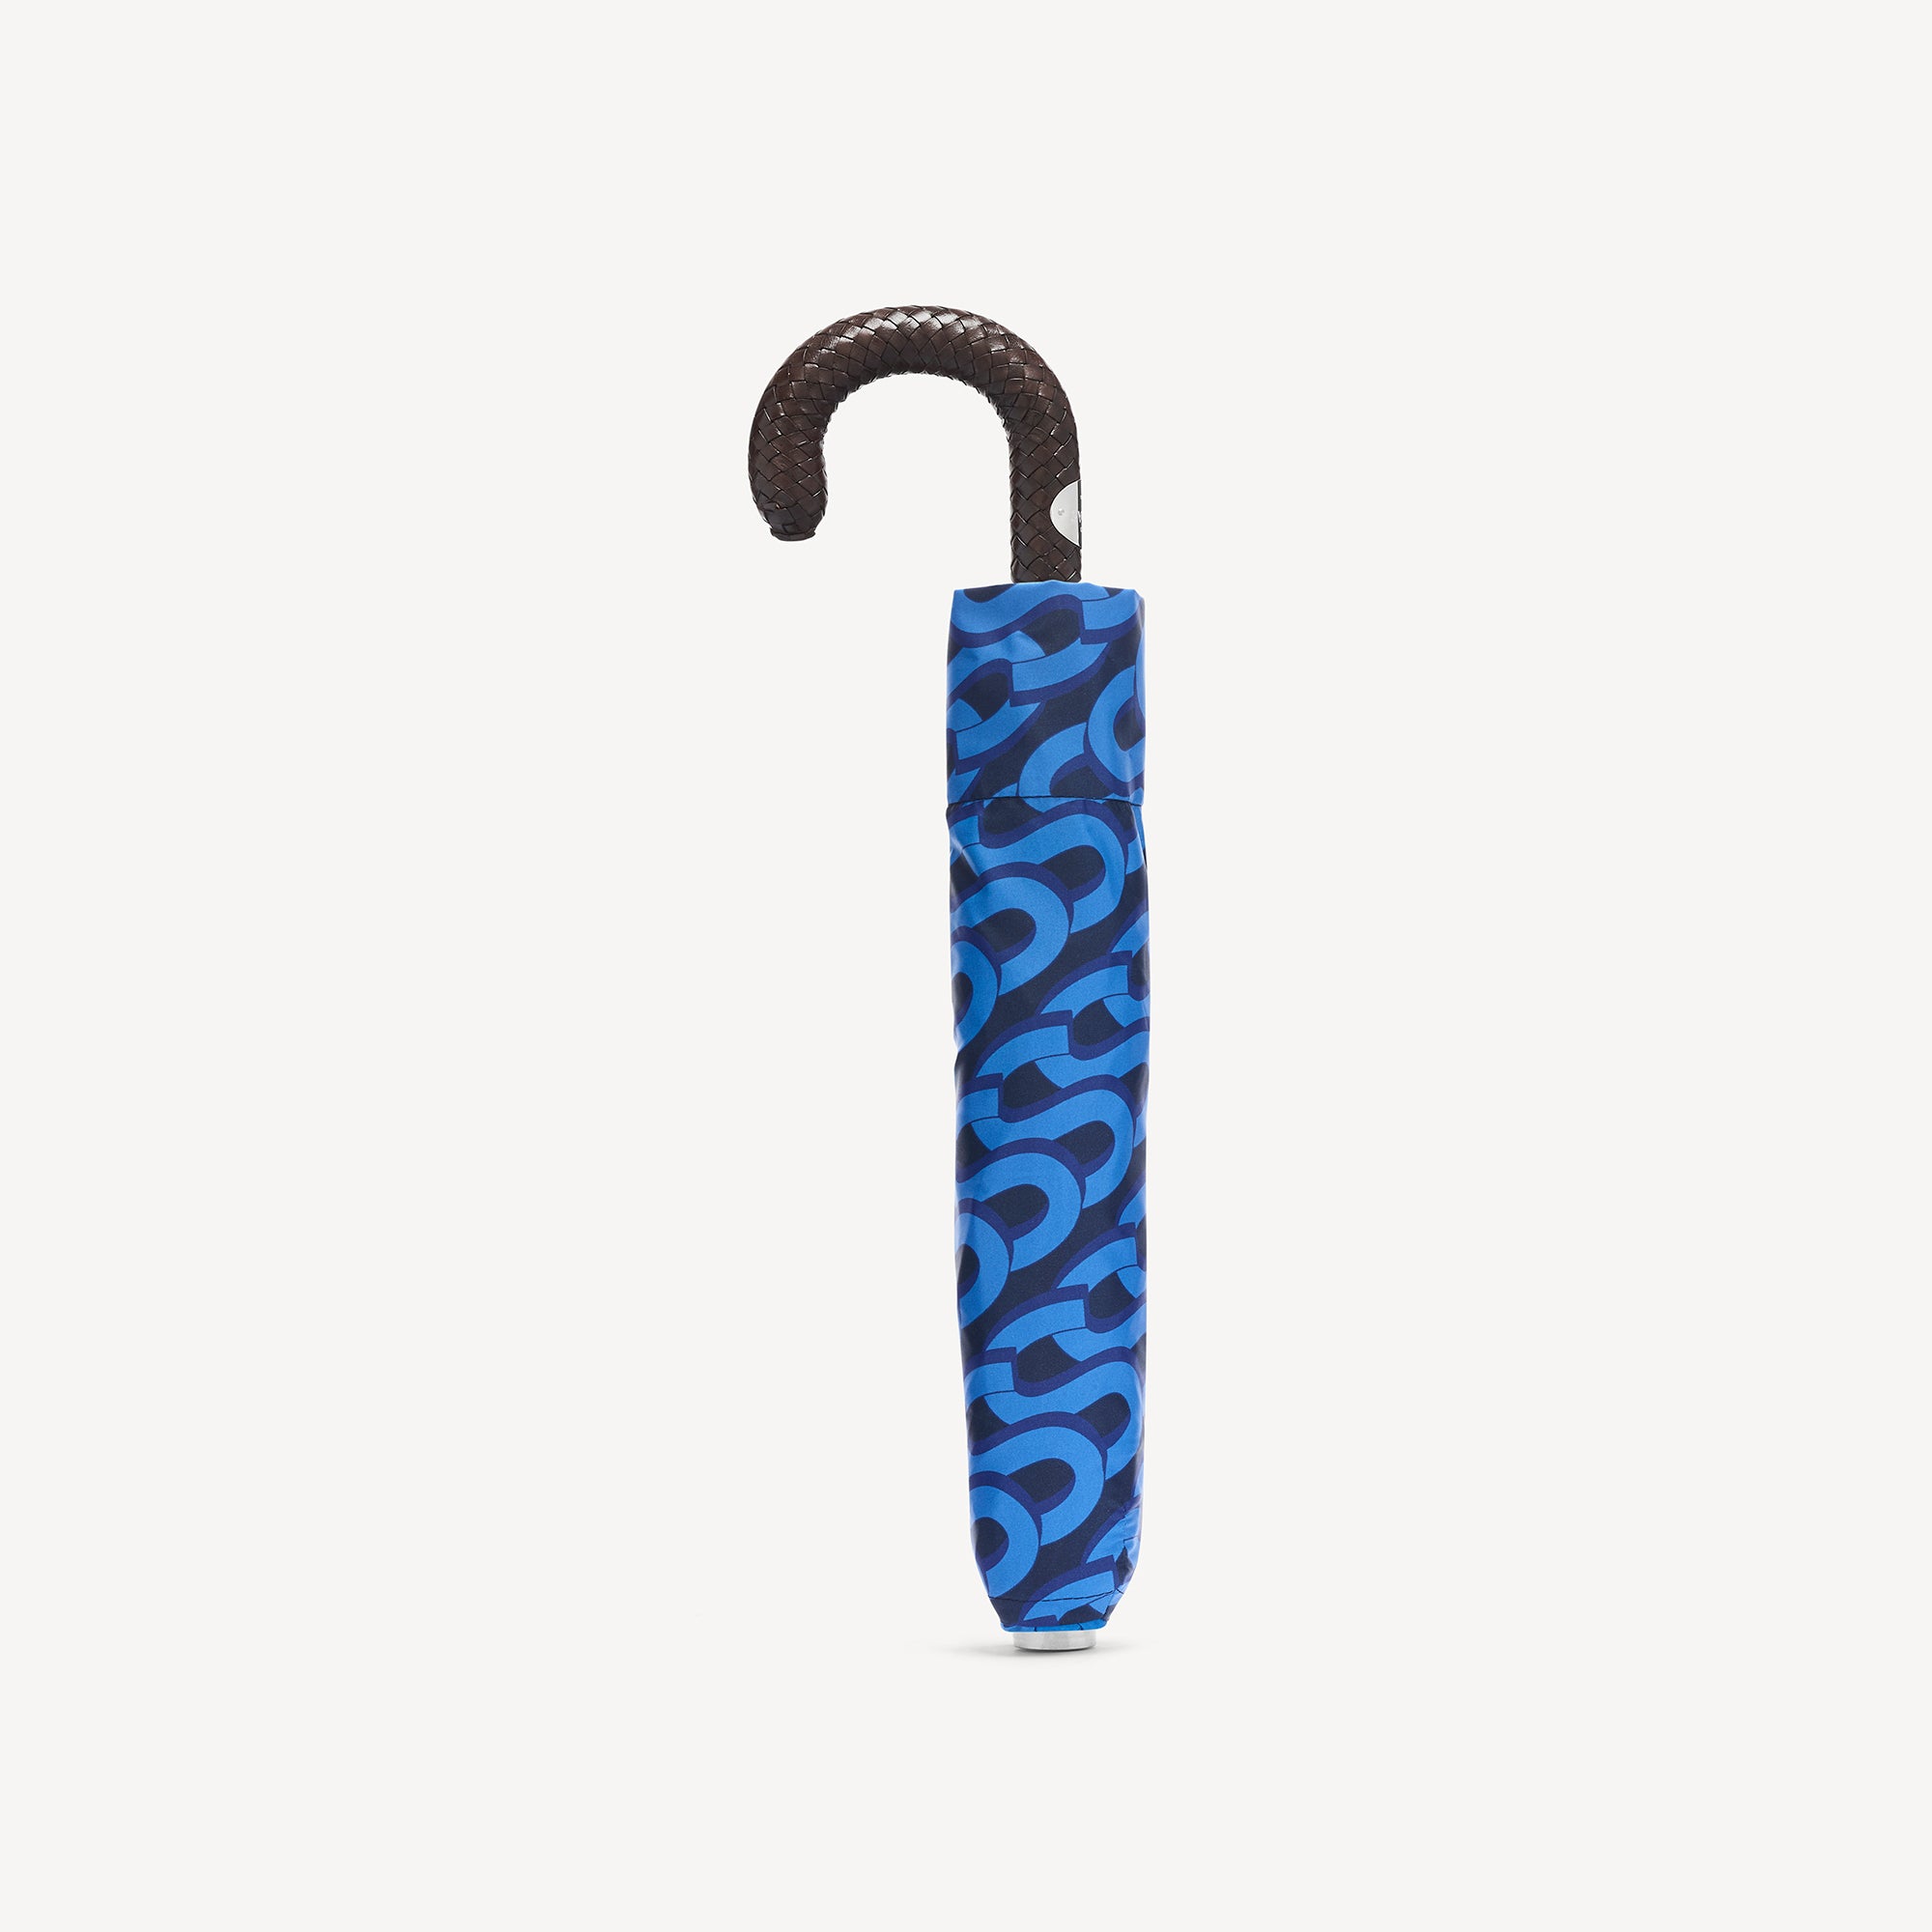 Collapsible Umbrella Braided Handle Monogram Print - Blue